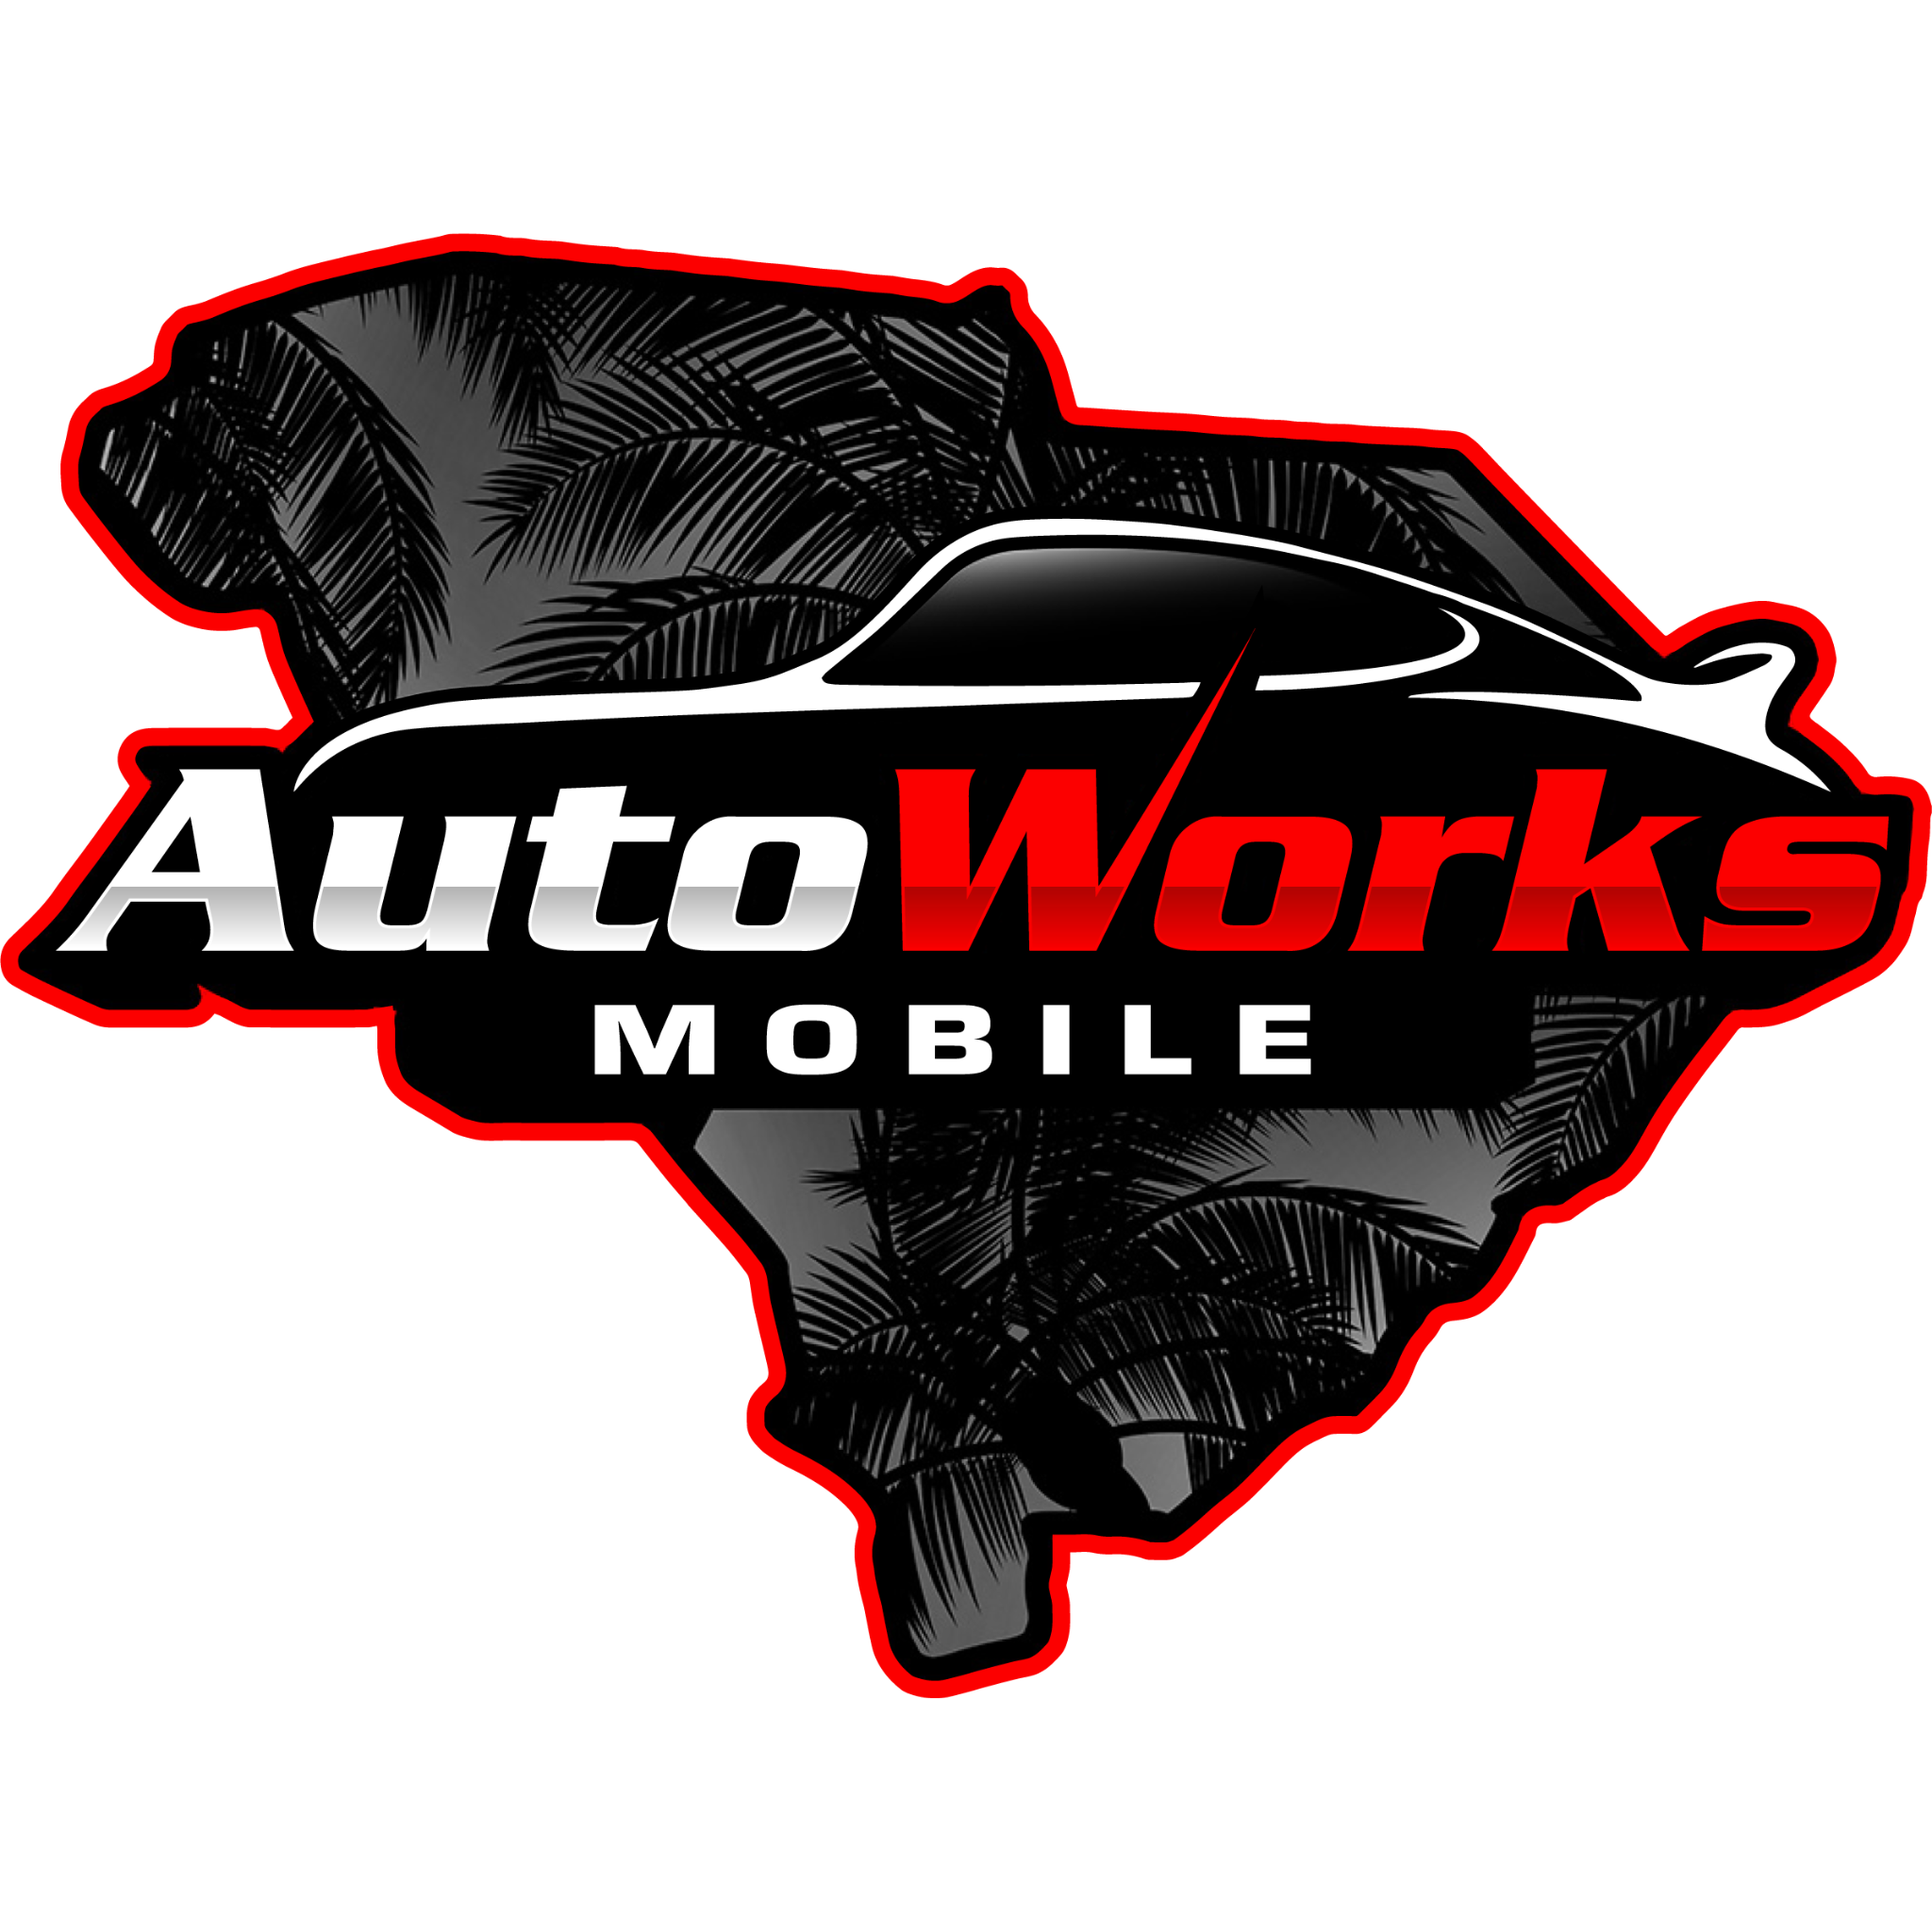 AutoWorks Mobile logo